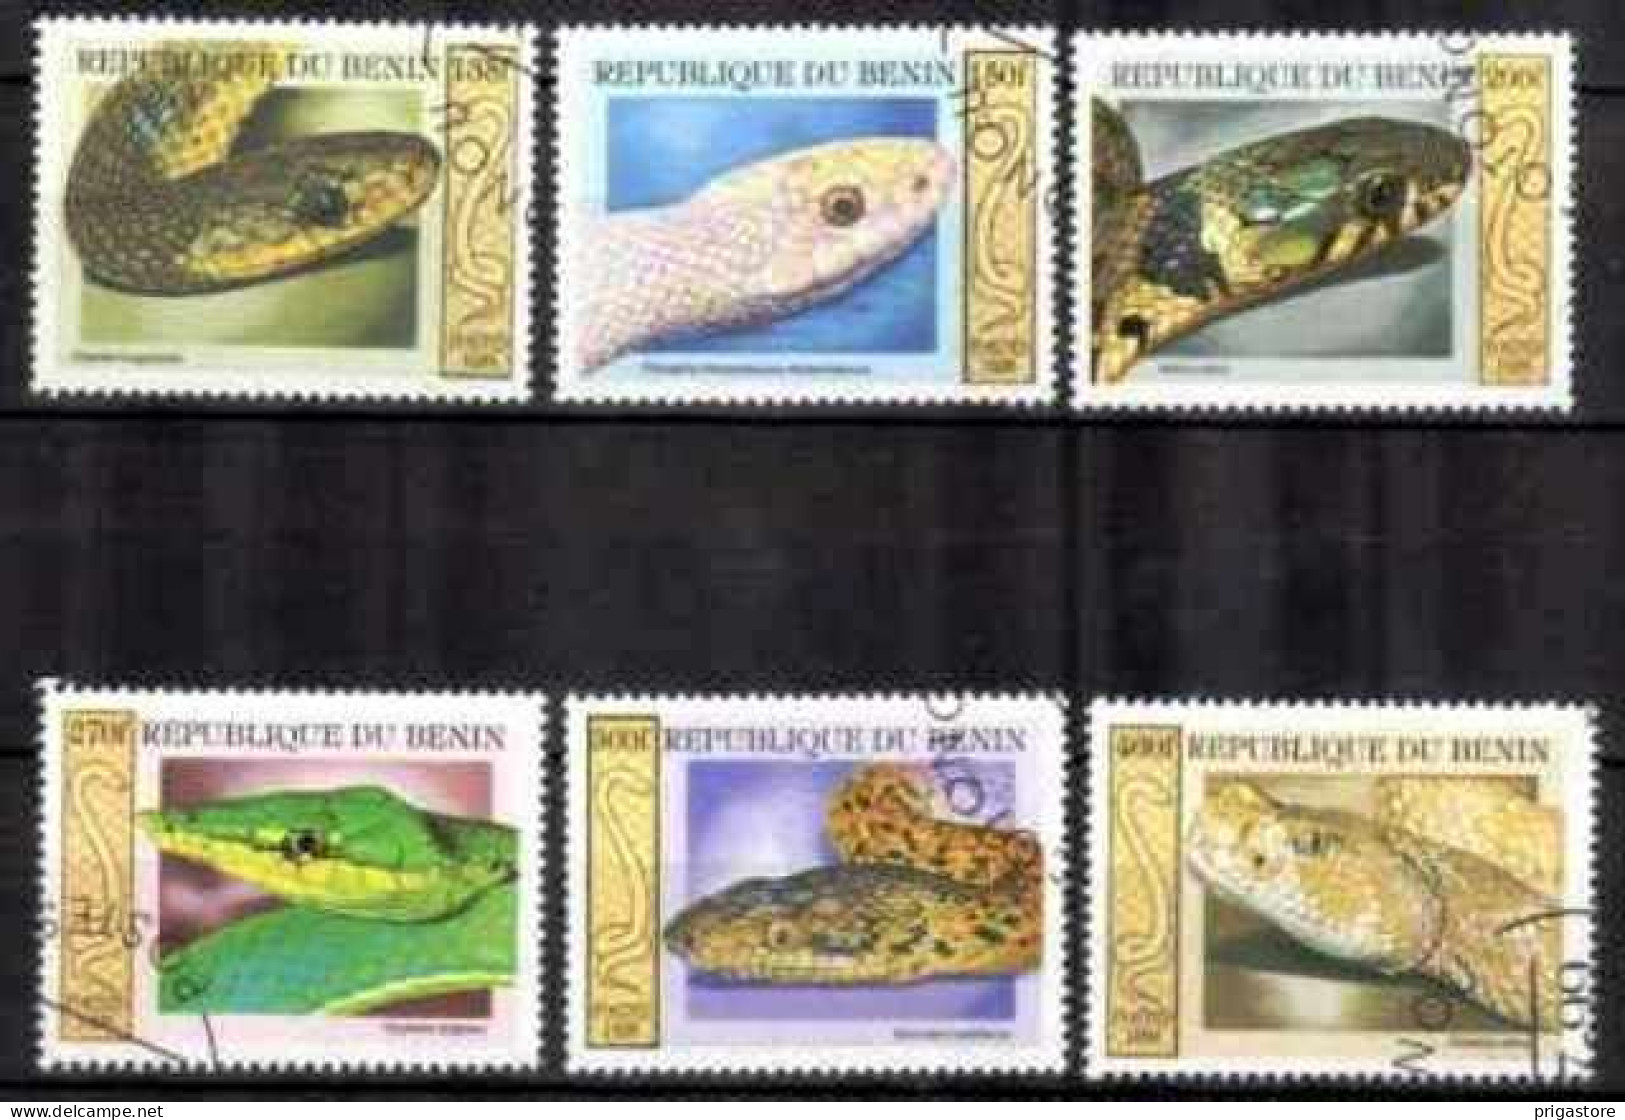 Animaux Serpents Bénin 1999 (30) Yvert N° 914 à 919 Oblitéré Used - Serpenti